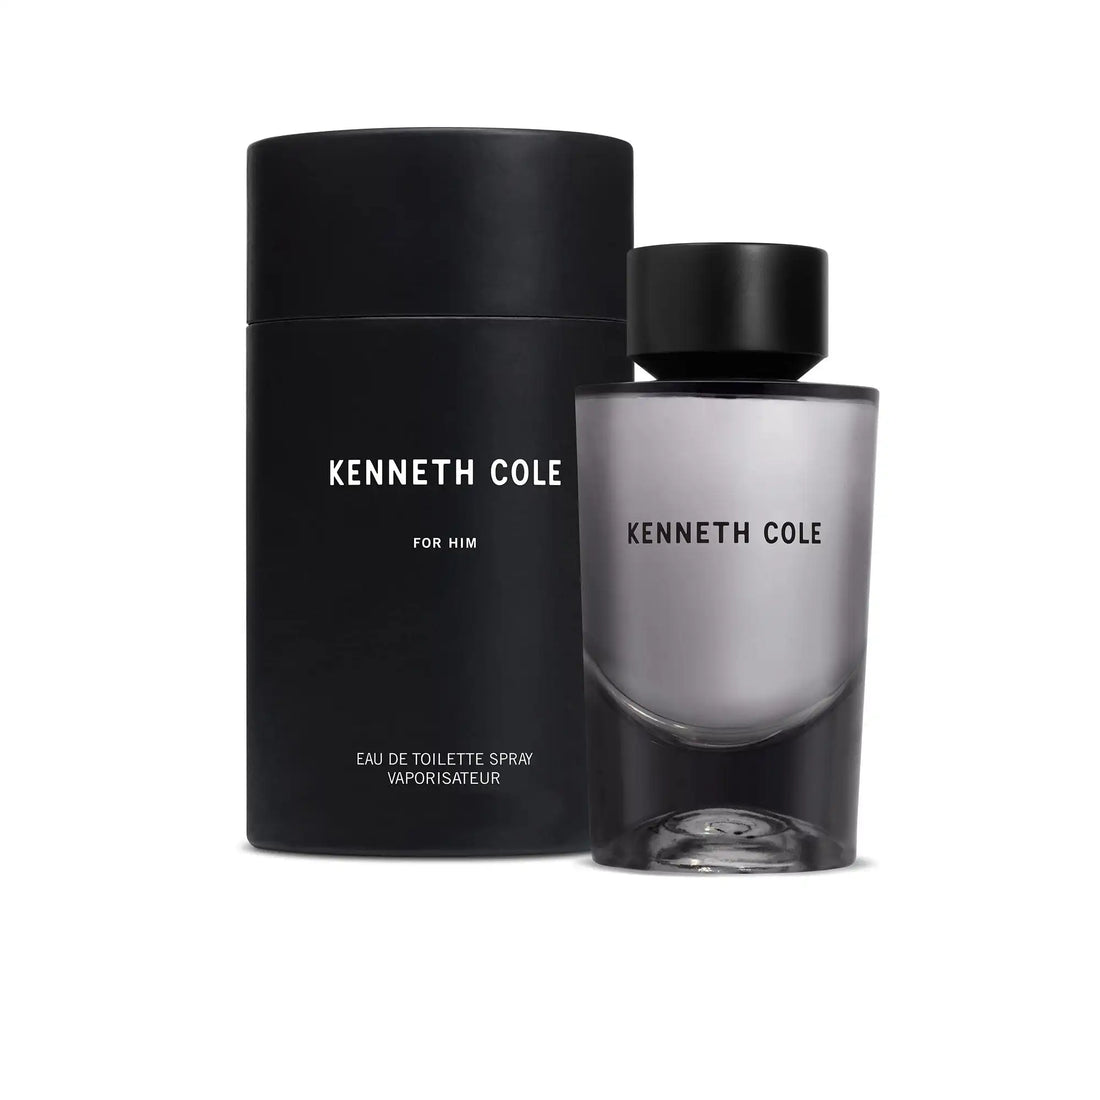 Kenneth Cole for Him Eau de Toilette Spray 50ml Packaging